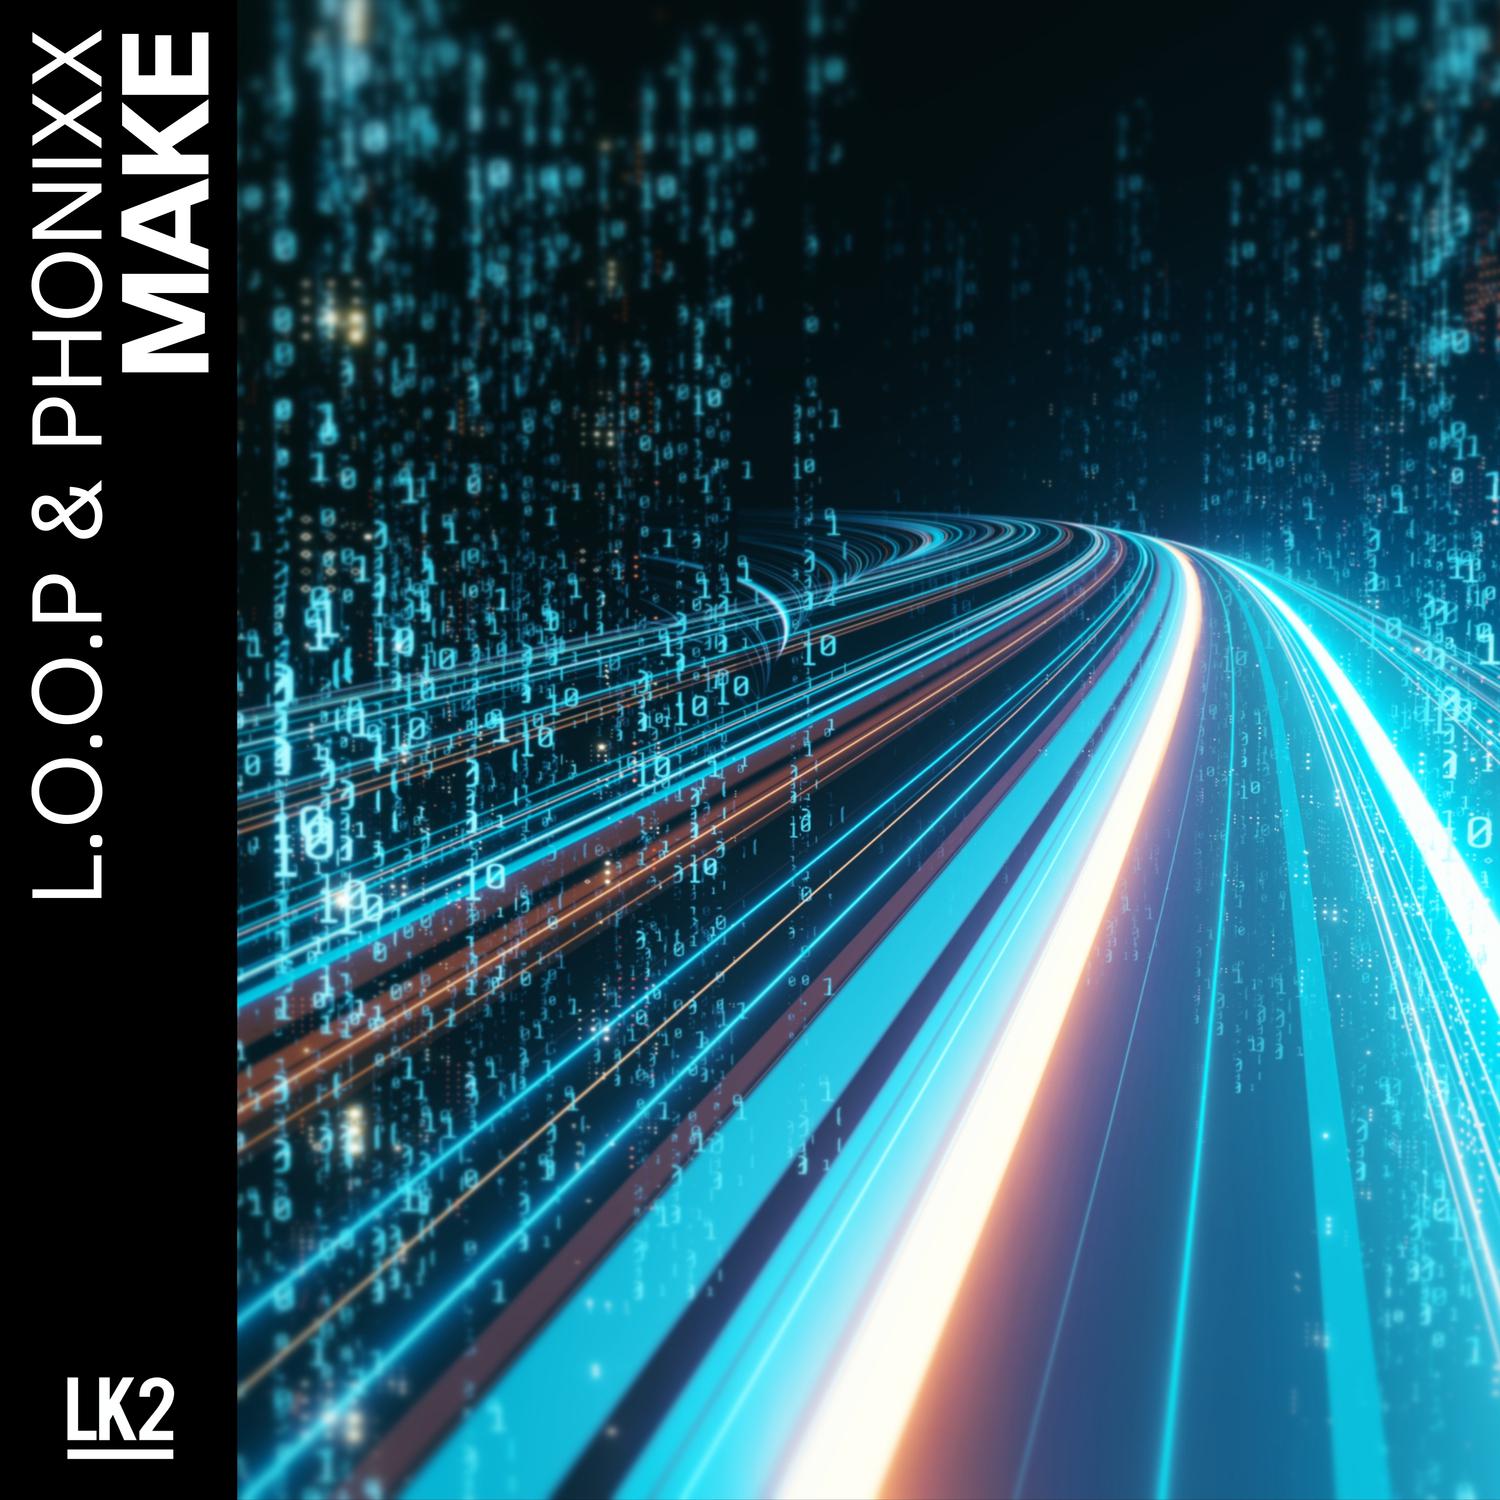 L.O.O.P - Make (Extended Mix)